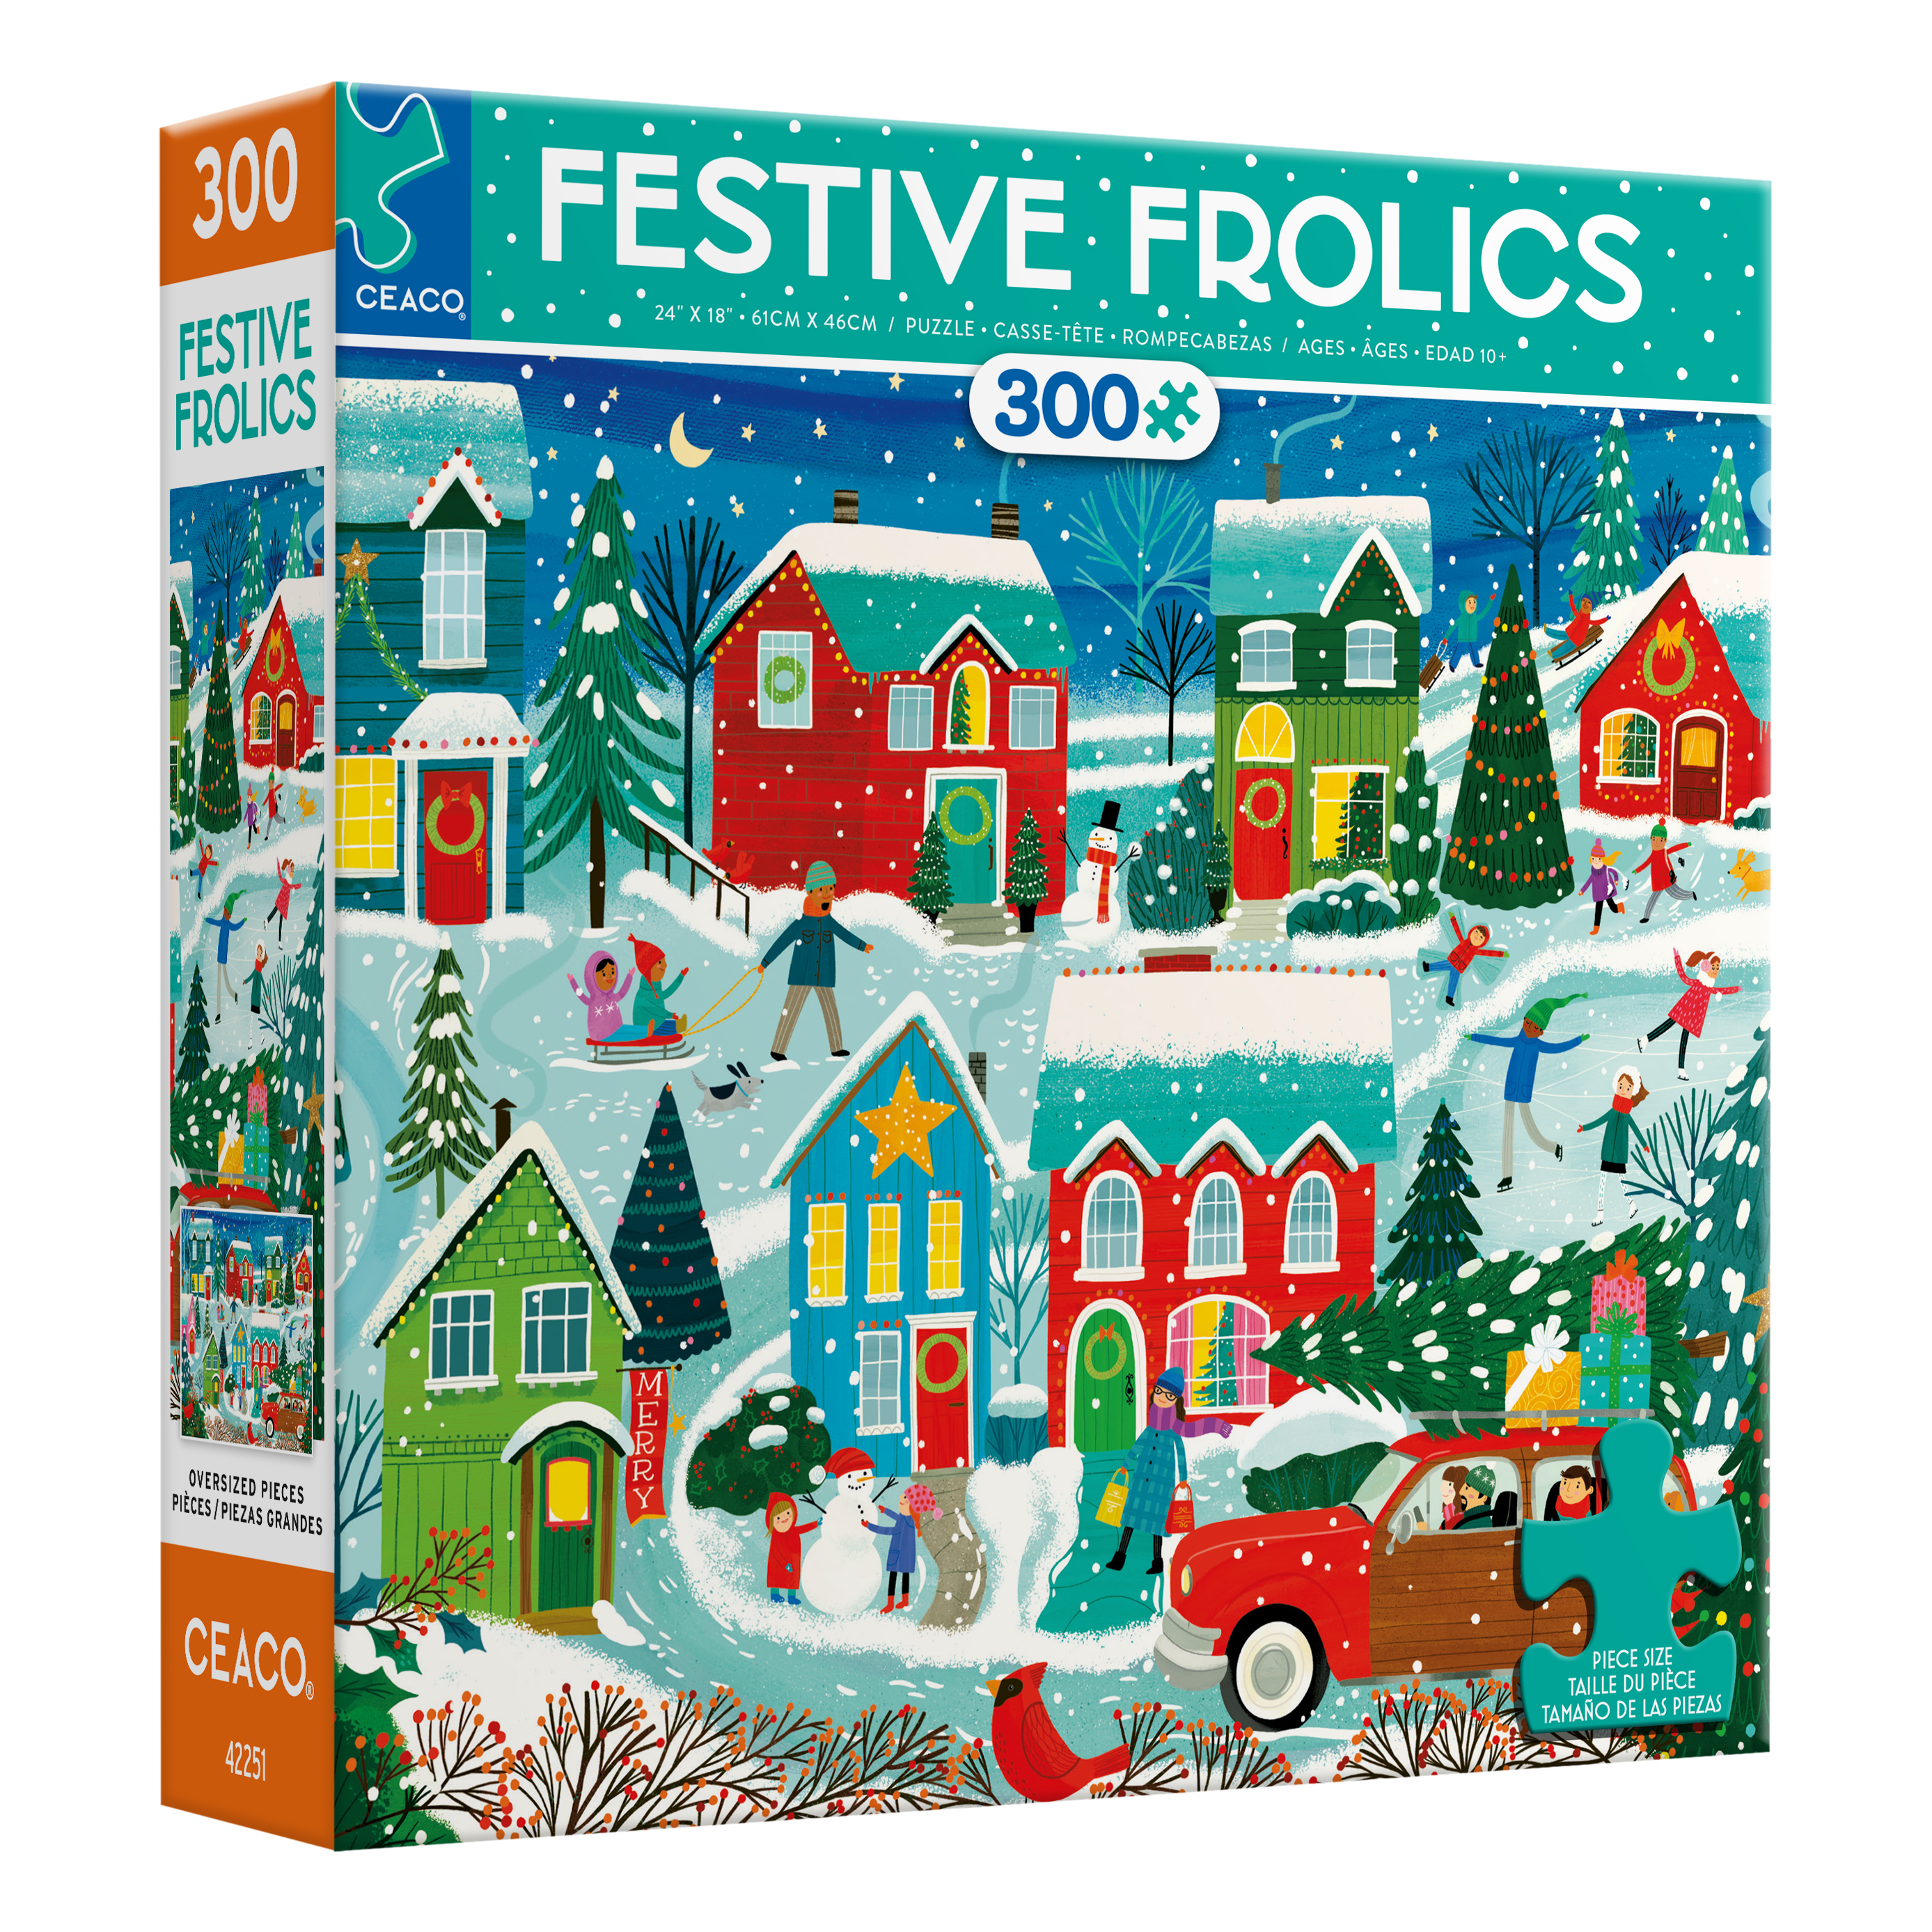 Festive Frolics Oversized Holiday